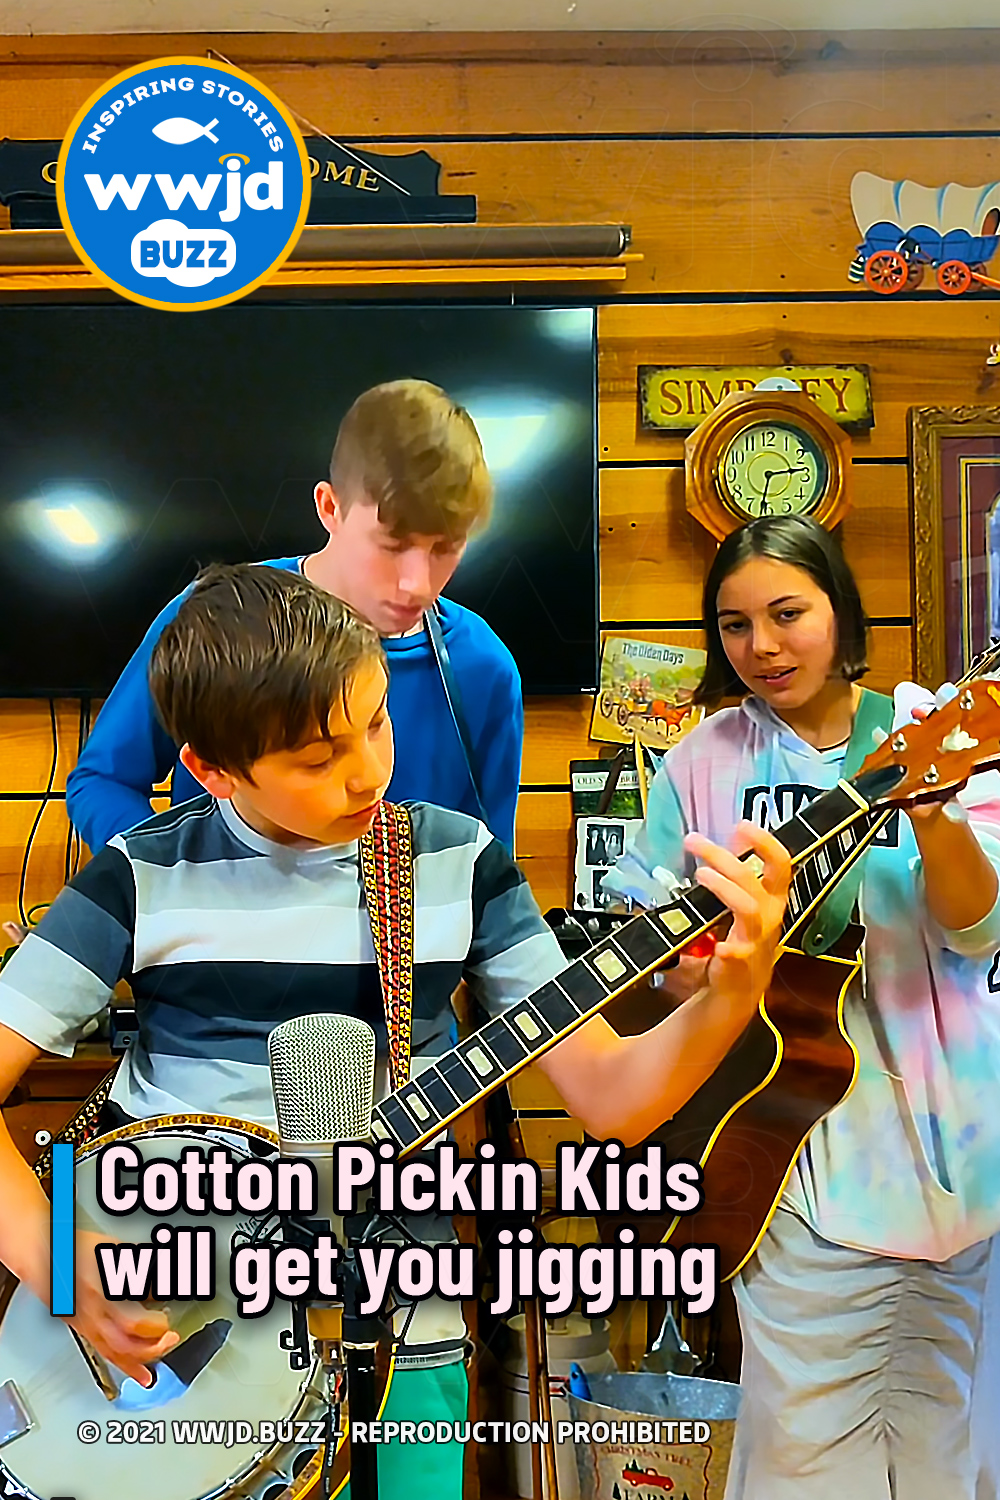 Cotton Pickin Kids will get you jigging